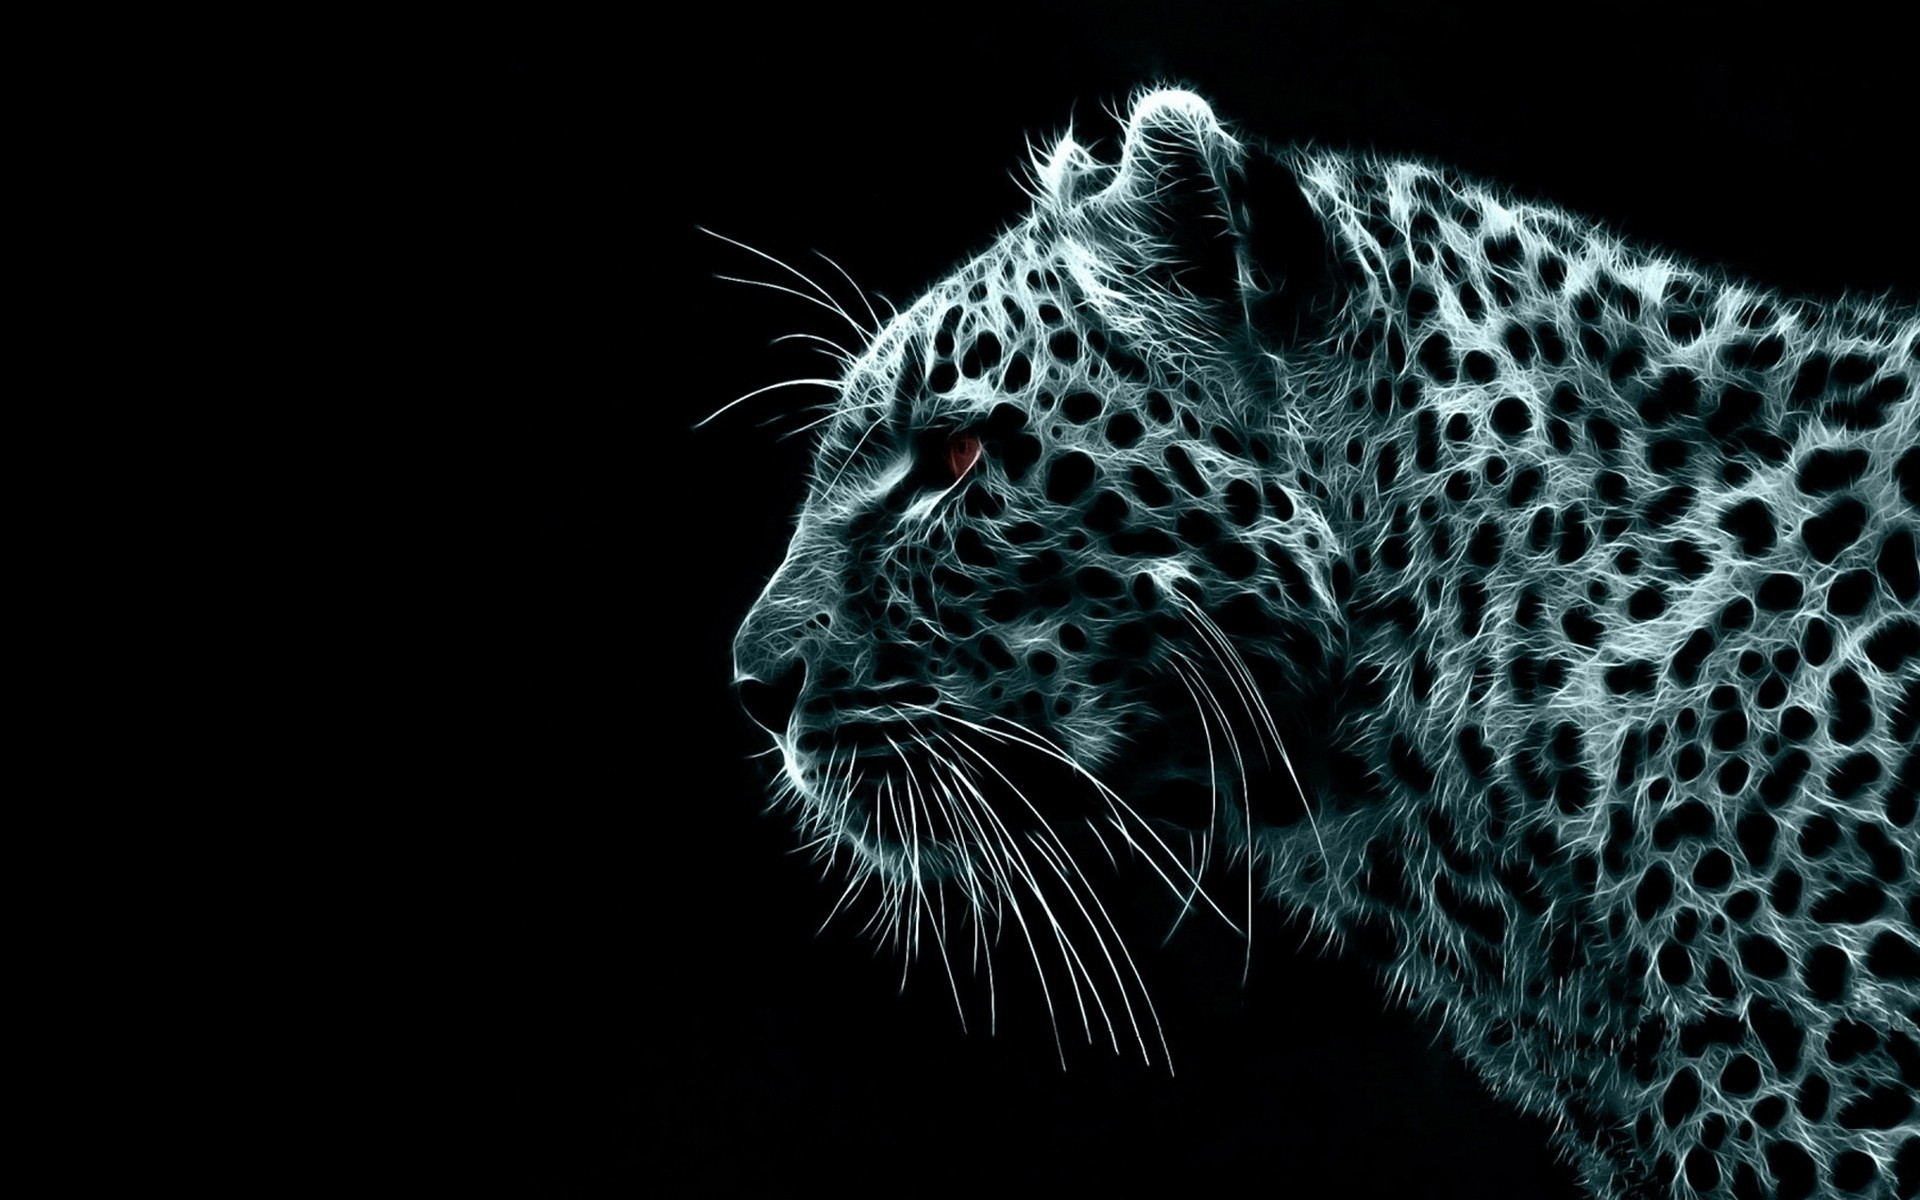 Free photo Jaguar in a monochrome photo